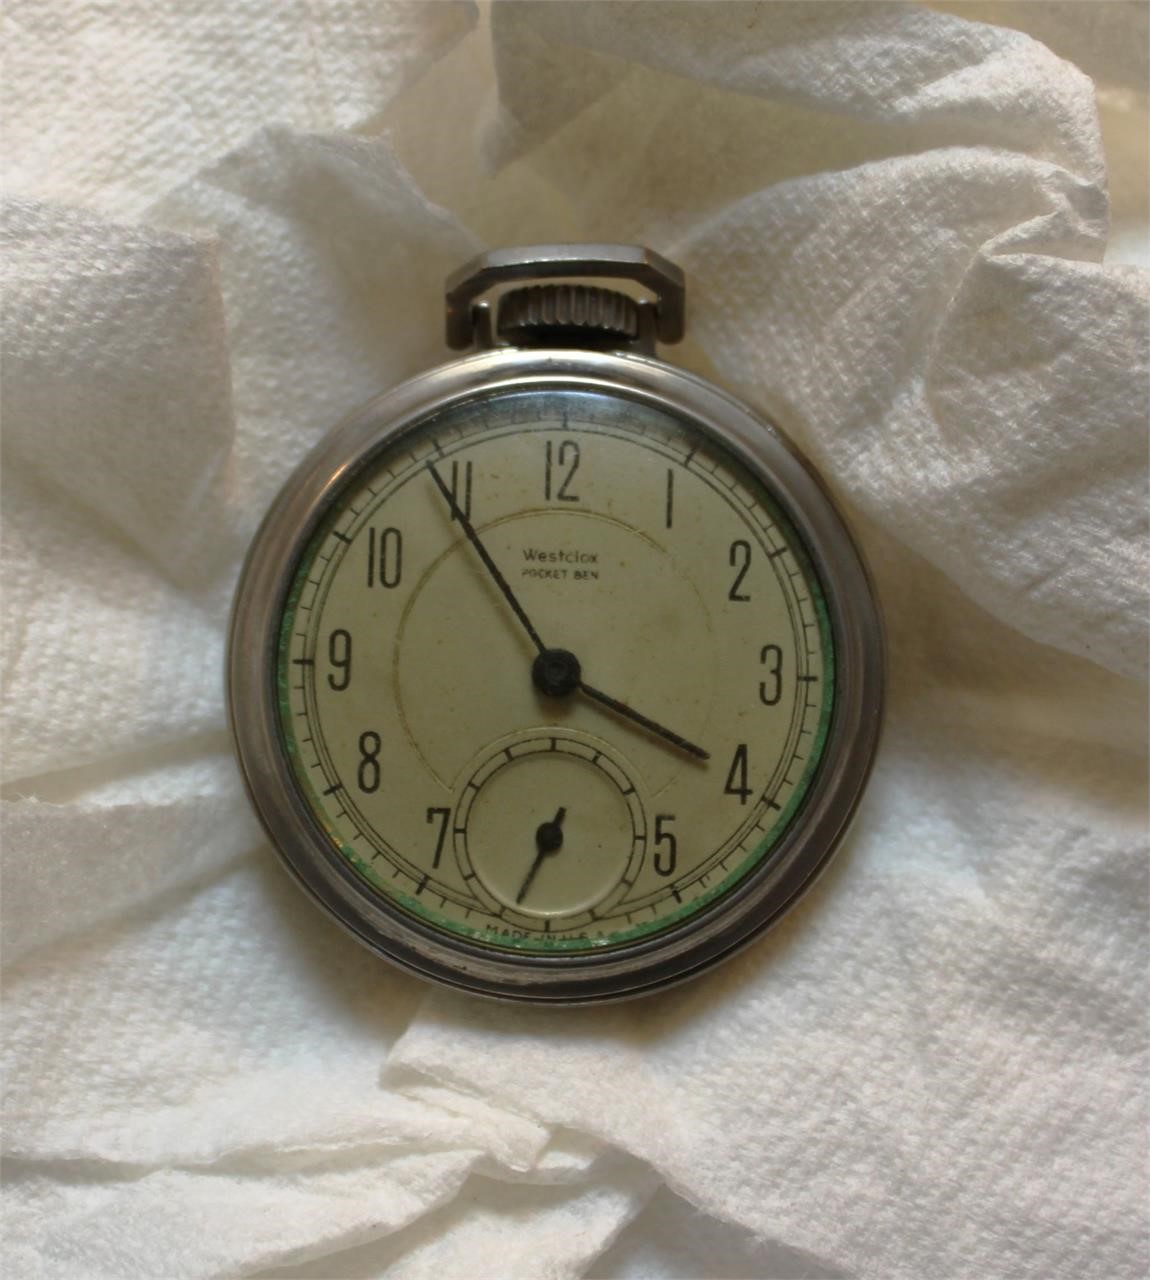 Vintage West Clox Pocket Ben Watch